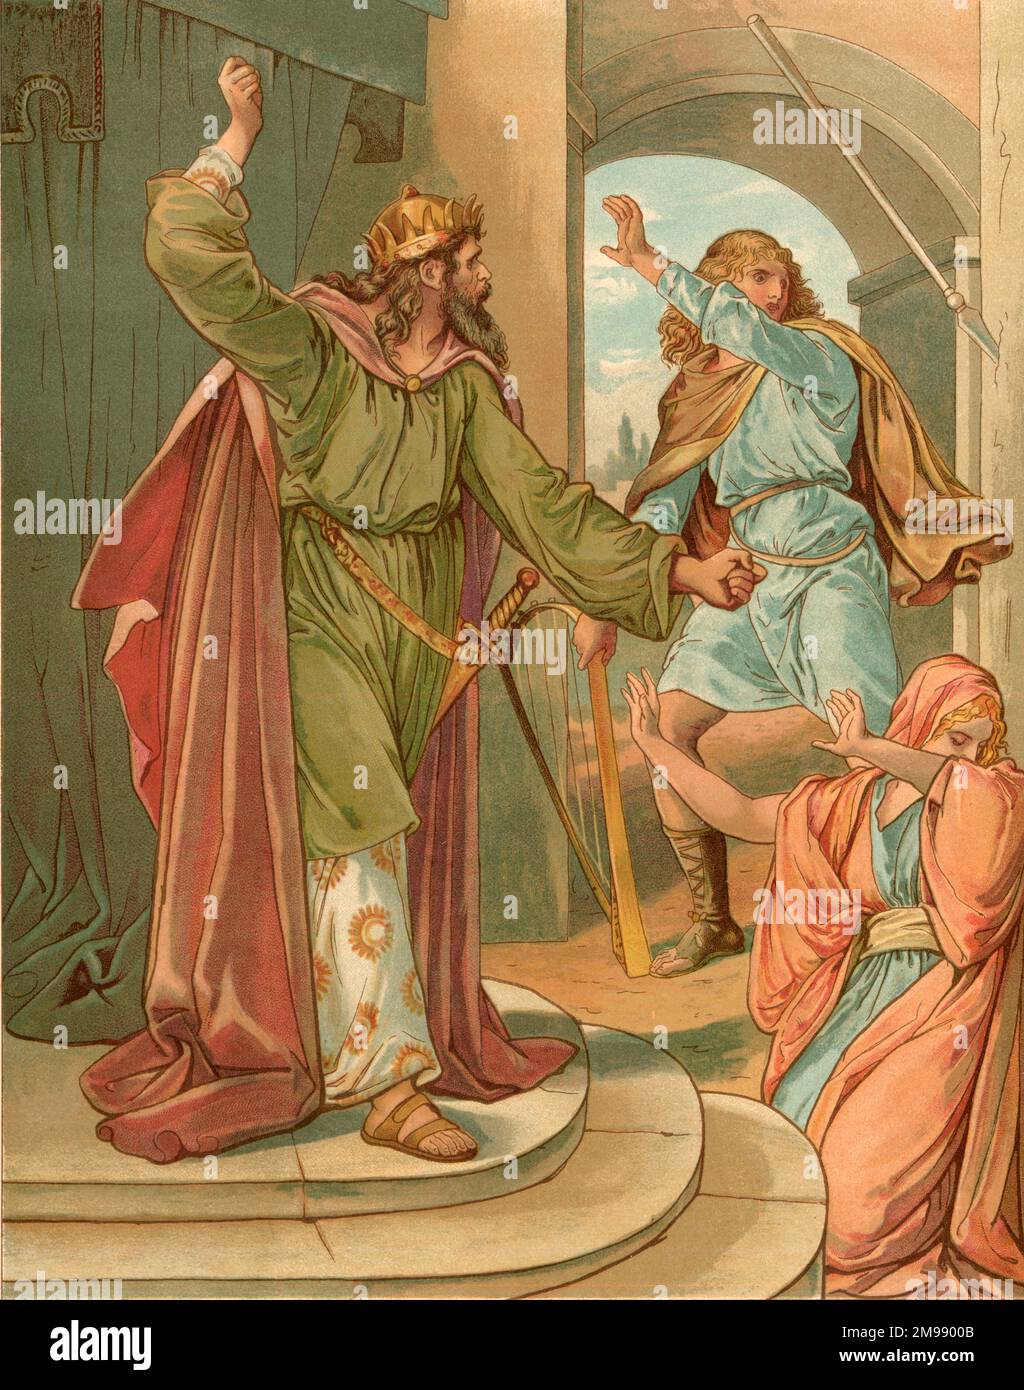 Biblical Tales by John Lawson, Saul's attempt to kill David. Stock Photo